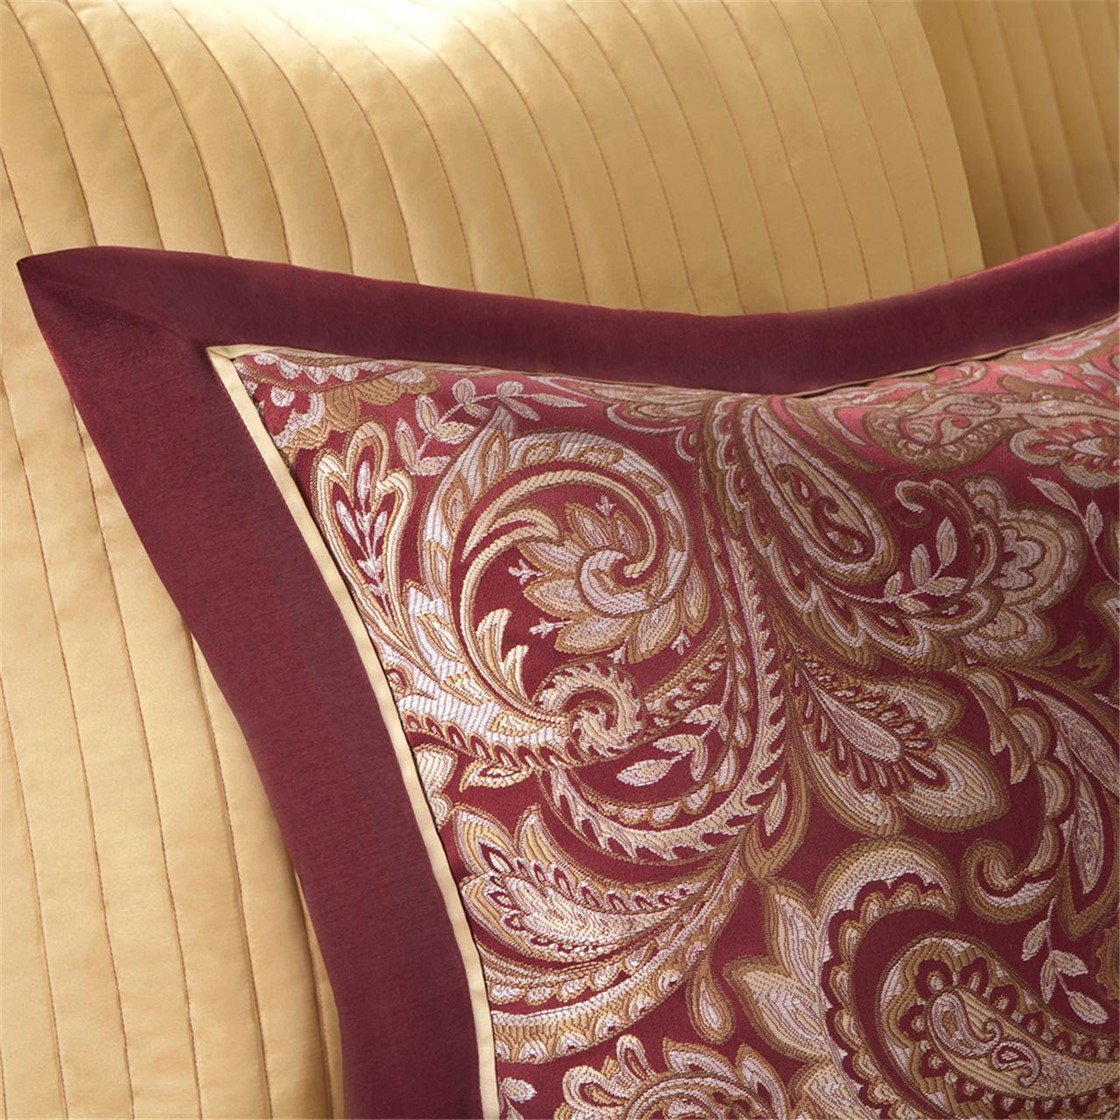 Aubrey Red 12-Piece Comforter Set Comforter Sets By Olliix/JLA HOME (E & E Co., Ltd)